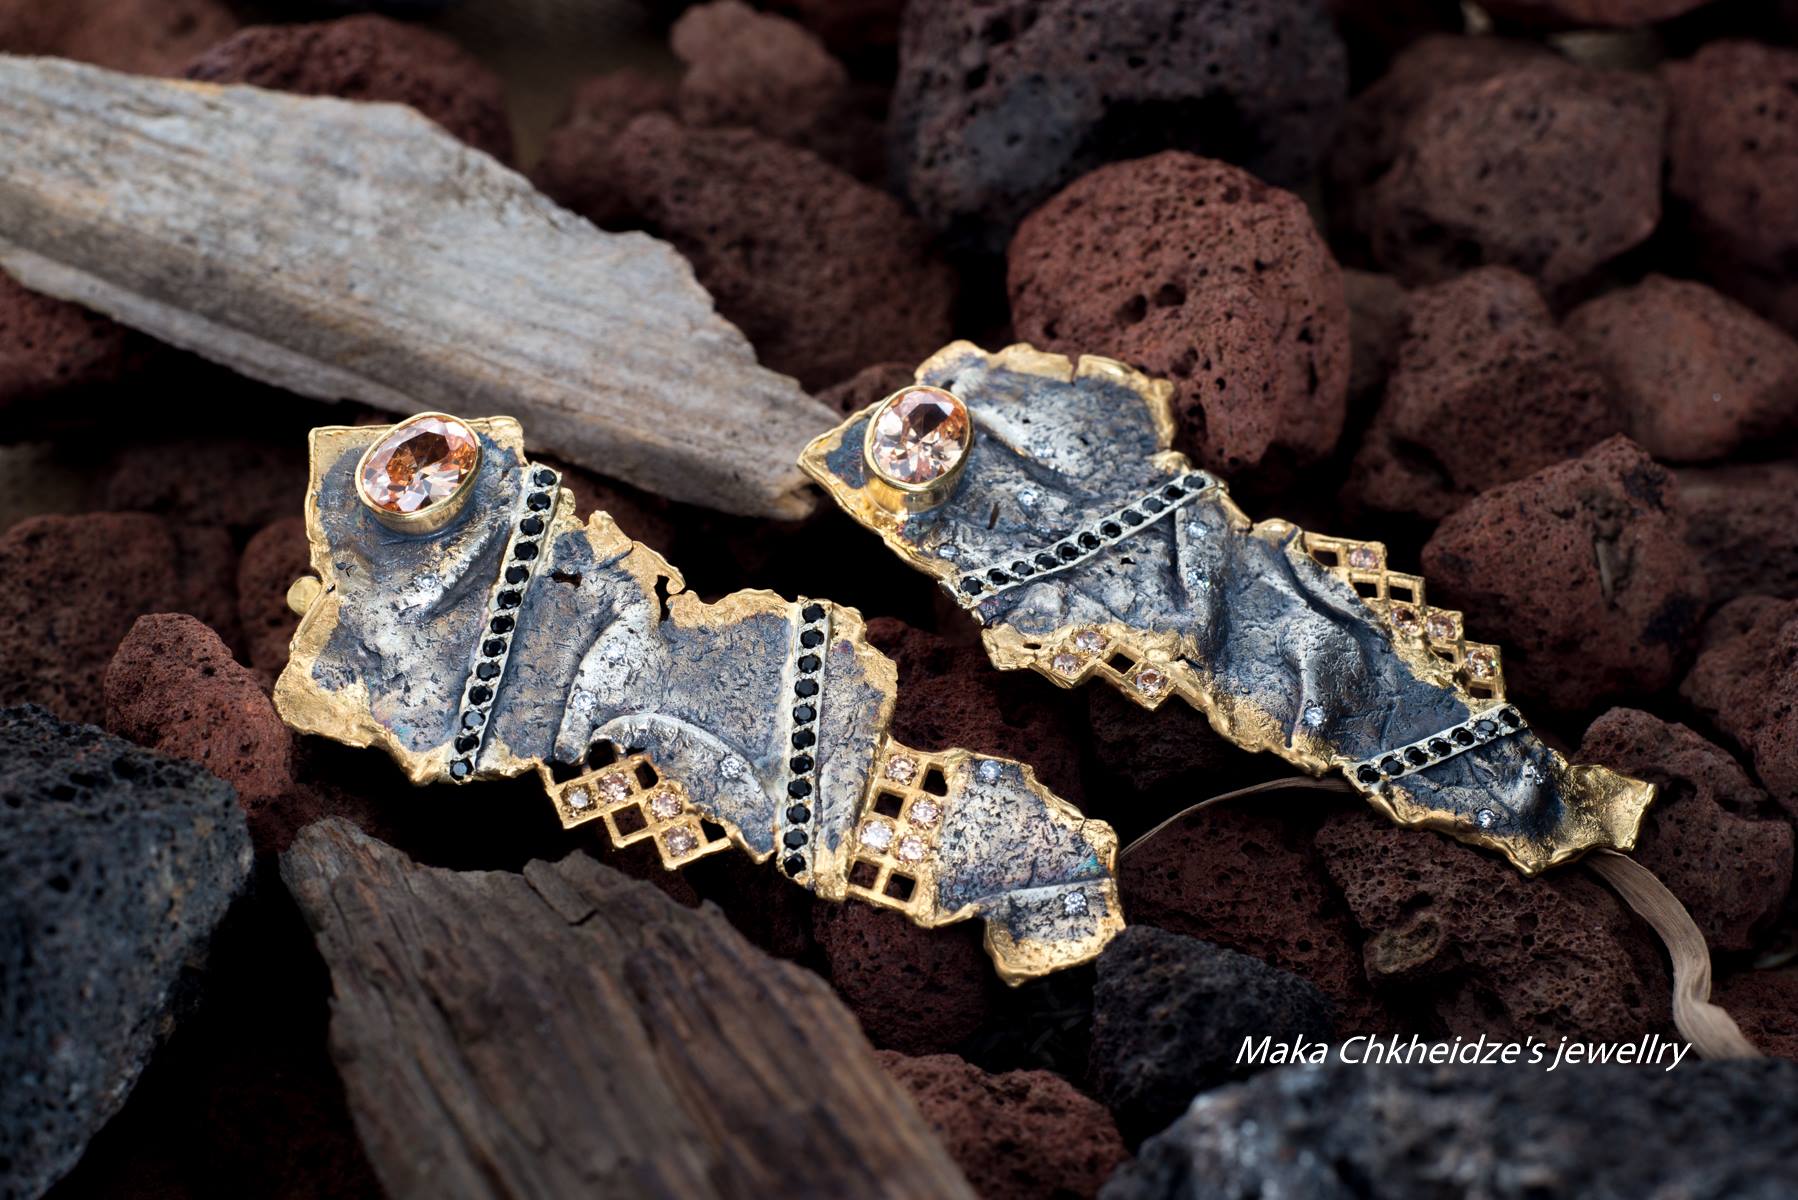 Jewellery by MaKa - სამკაული რომელსაც ასაკი არ აქვს